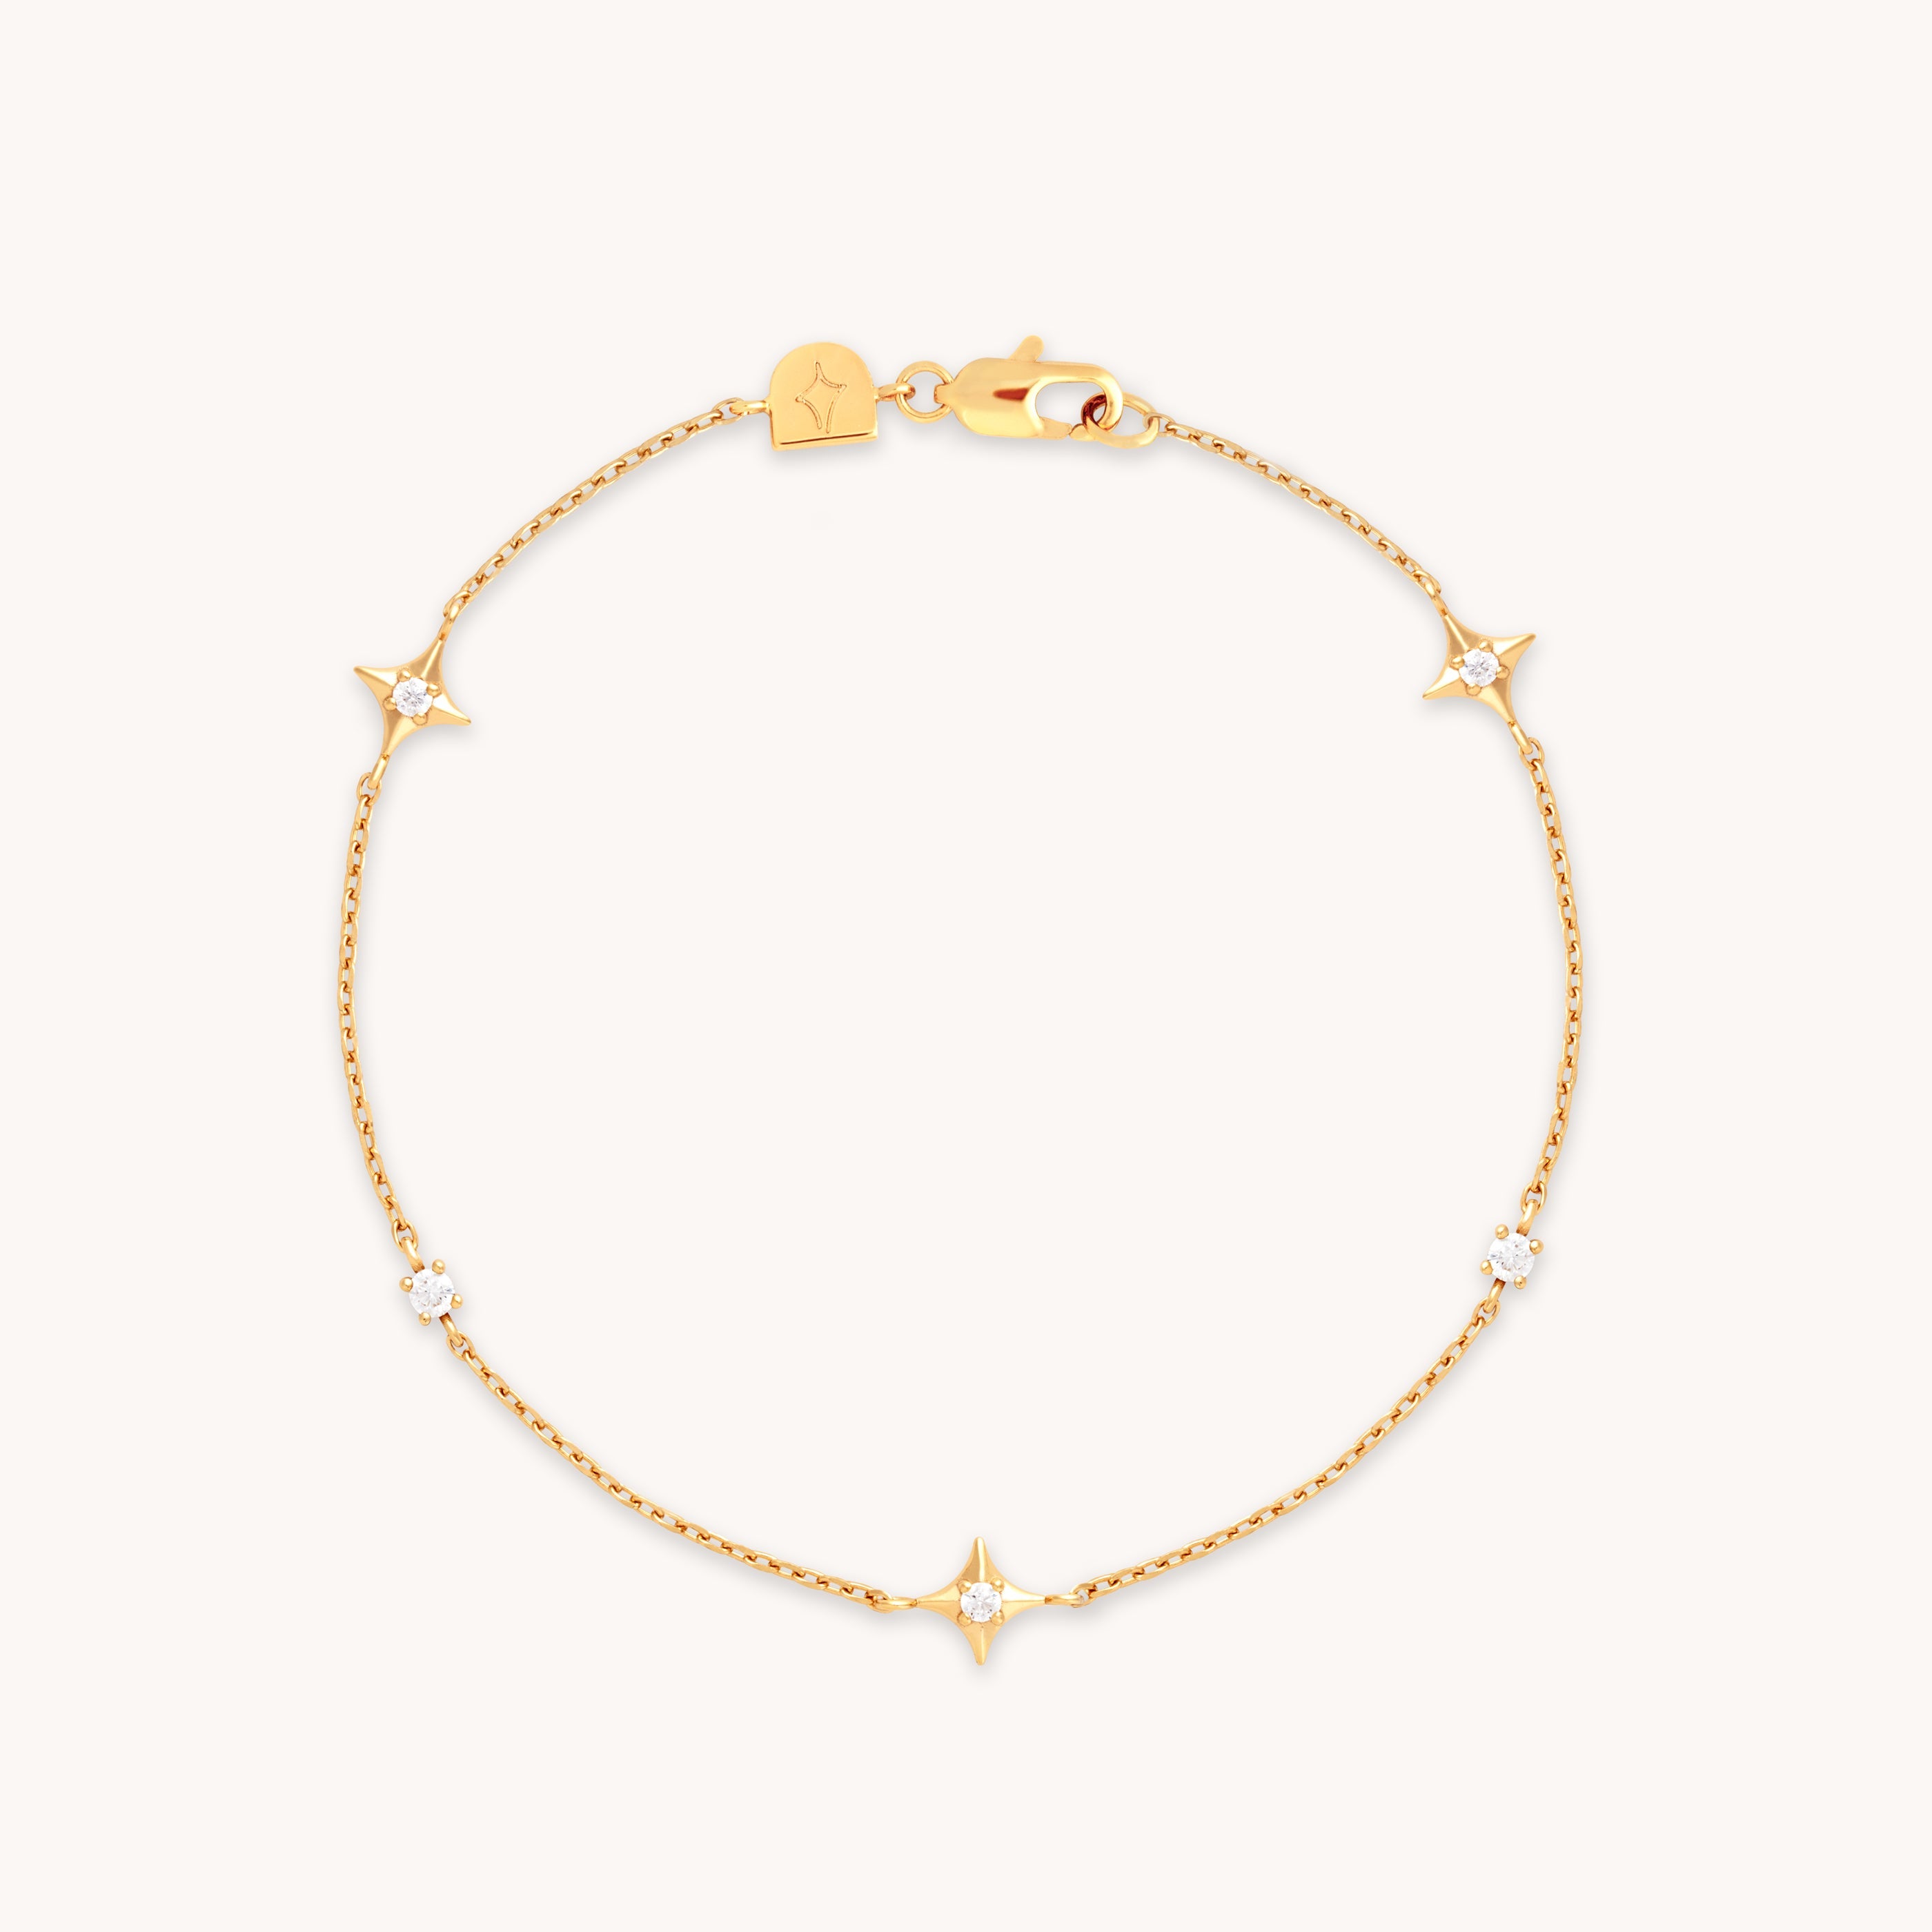 Cosmic Star Gold Charm Bracelet | Astrid & Miyu Bracelets